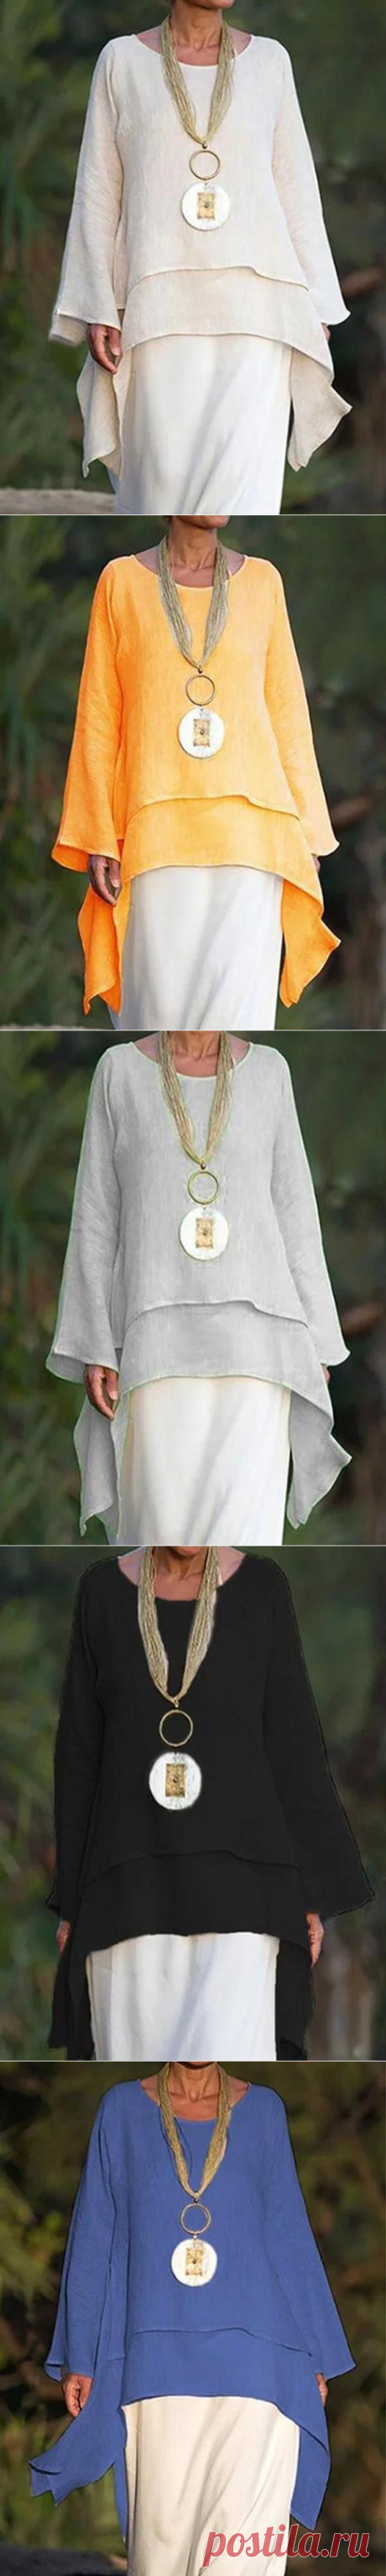 Stylish plain women long sleeve blouses - Cicicloth